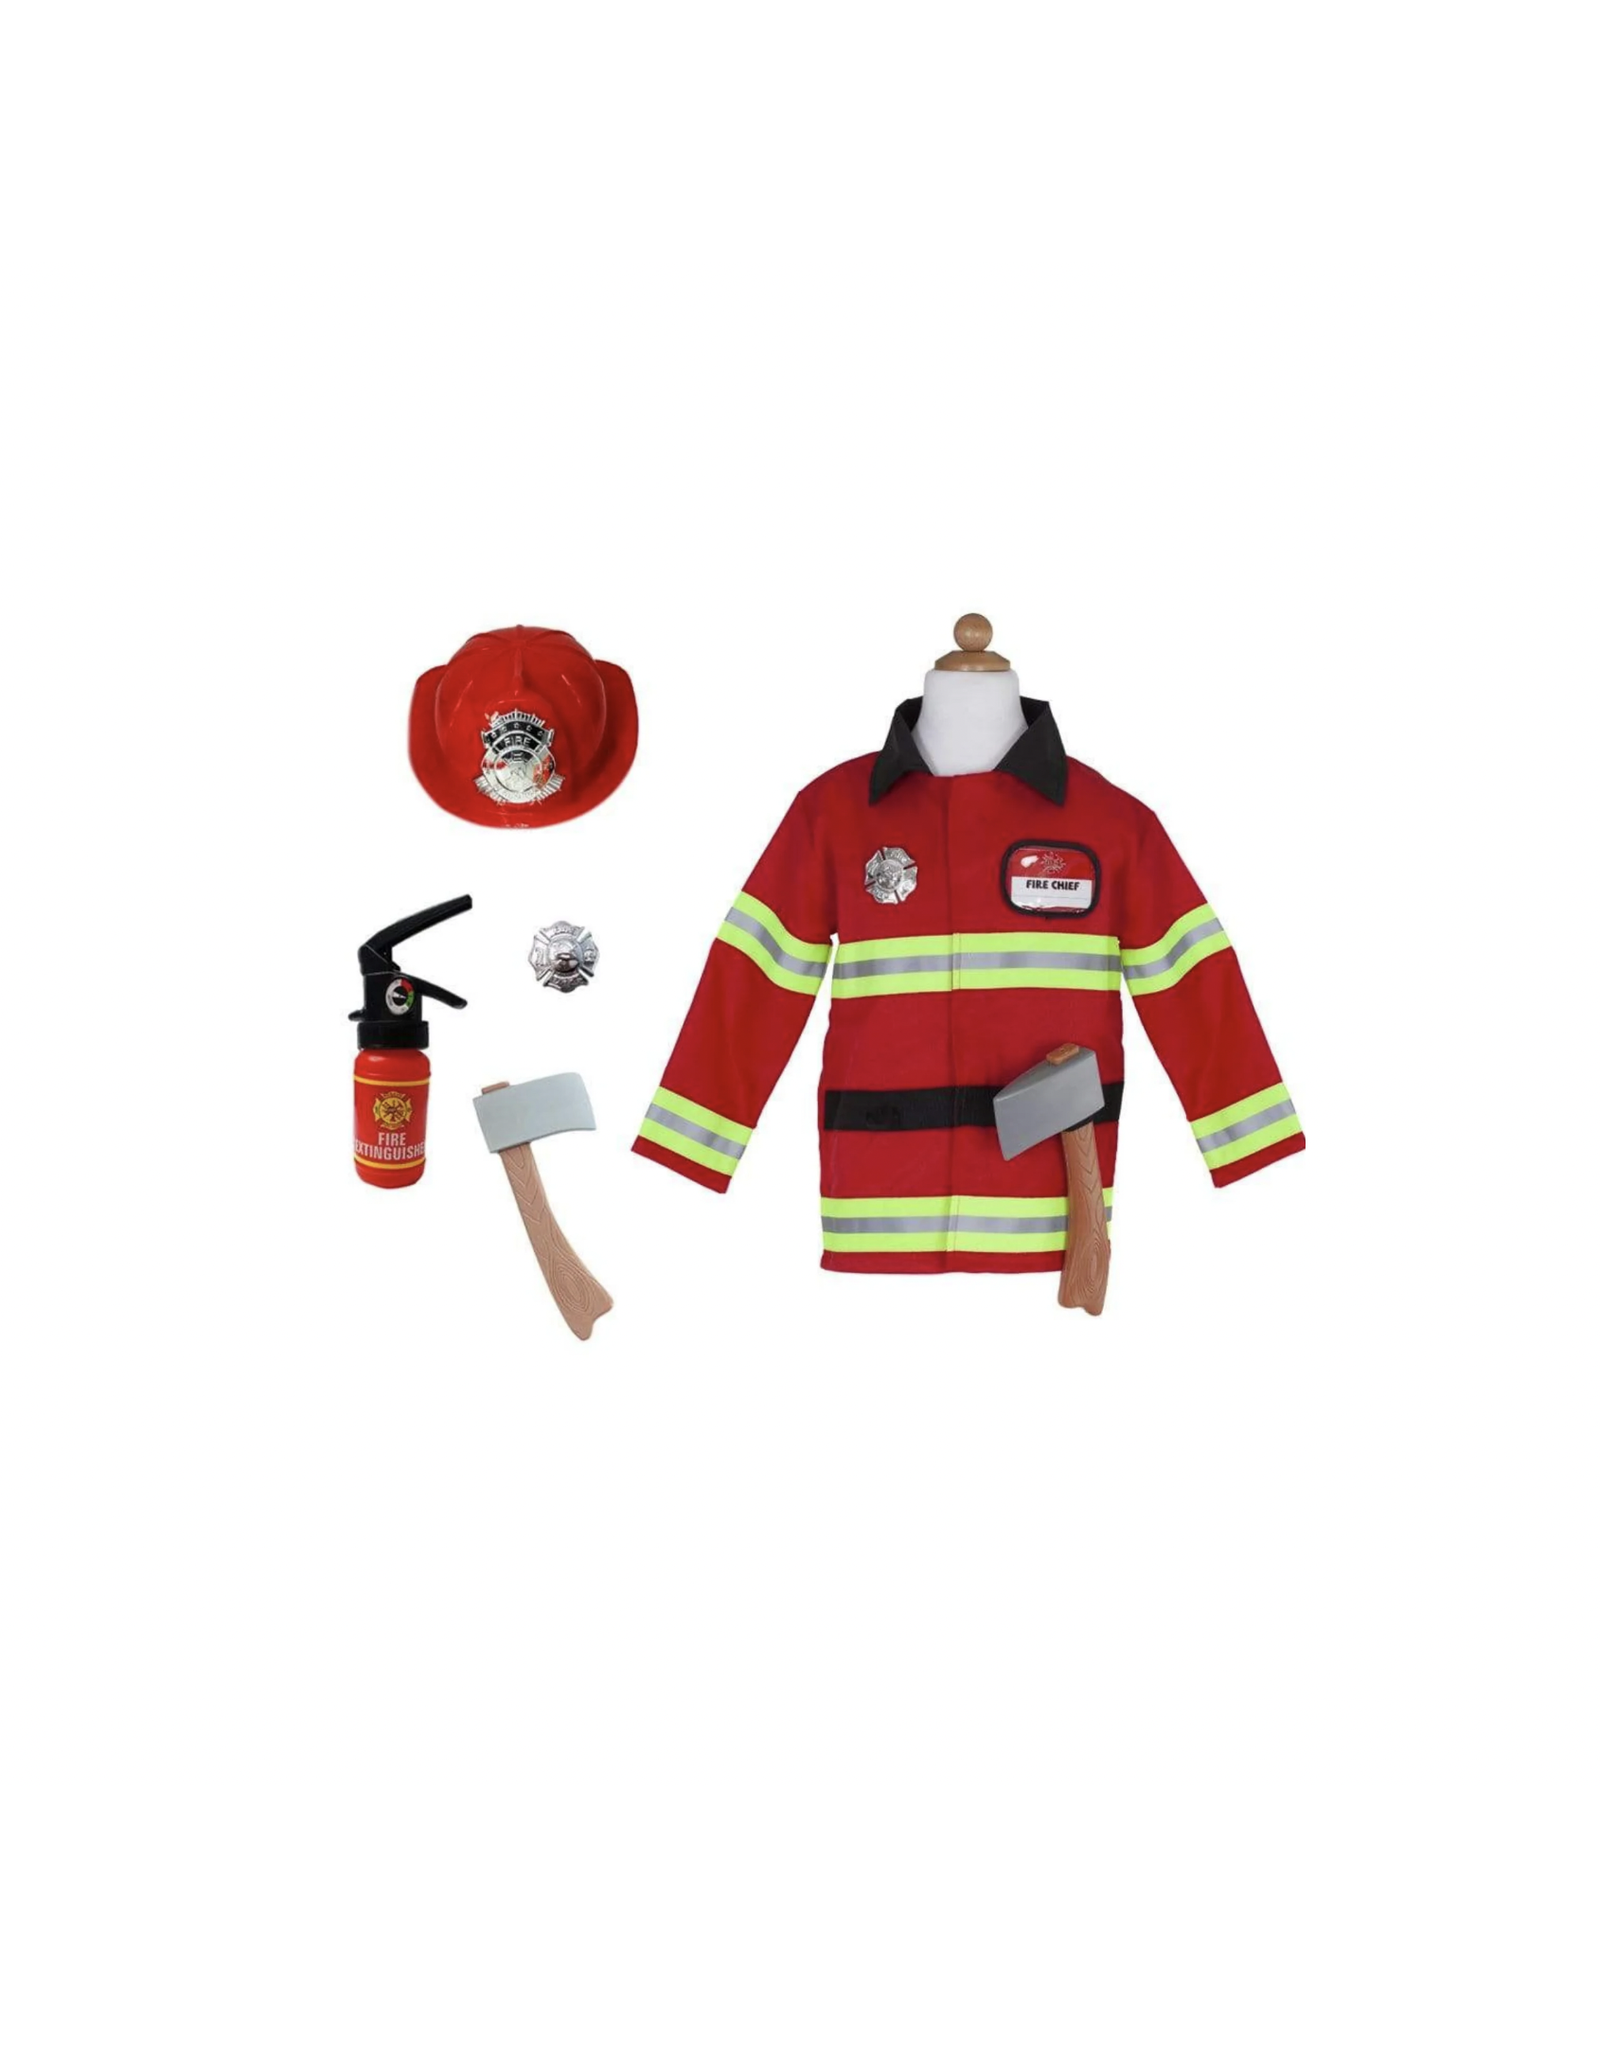 Great Pretenders Fireman Costume, Size 3/4